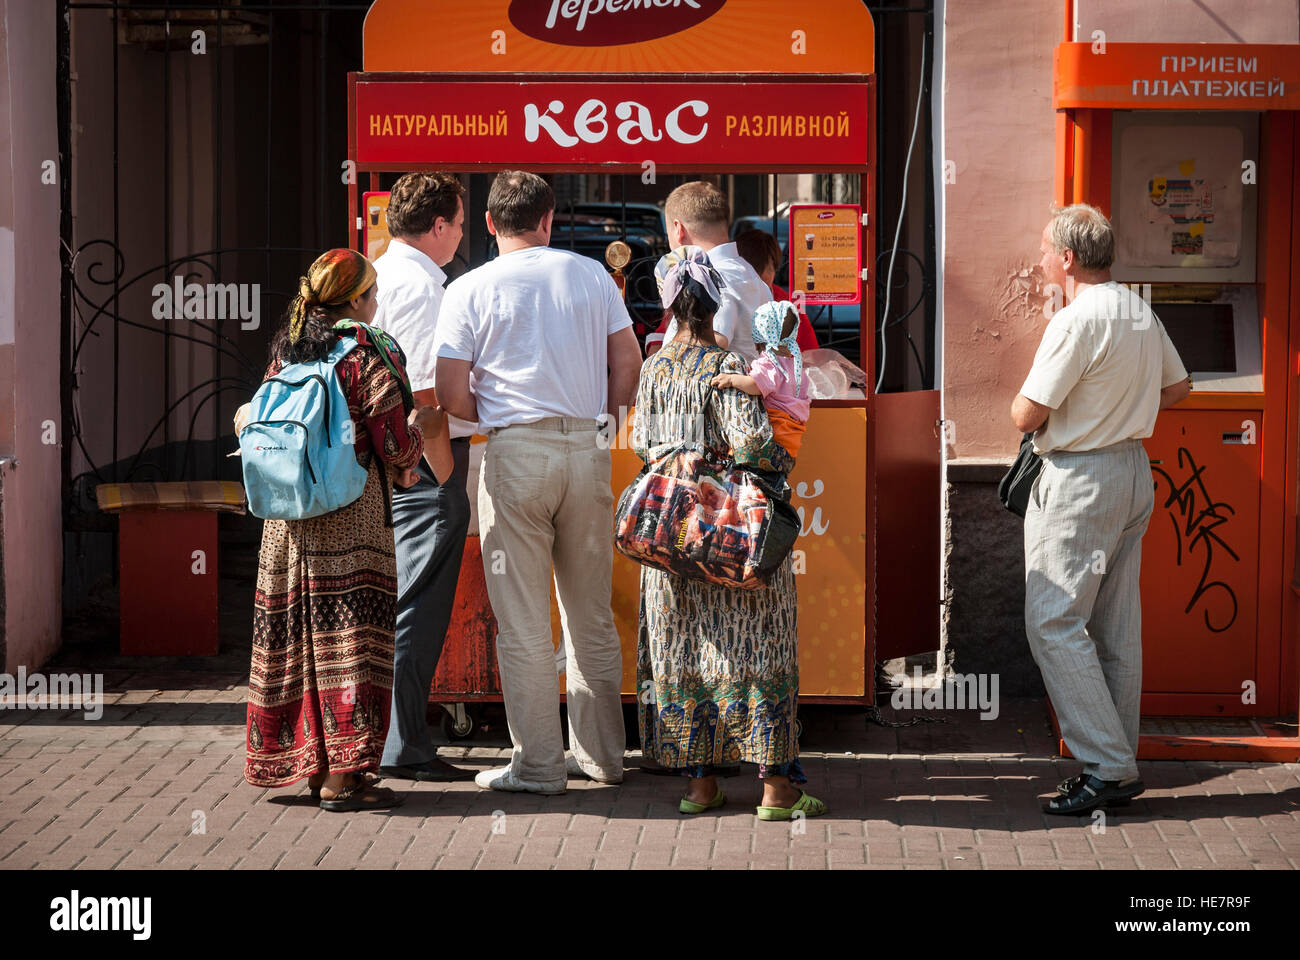 Gypsies panhandling at kvass kiosk in Moscow Stock Photo